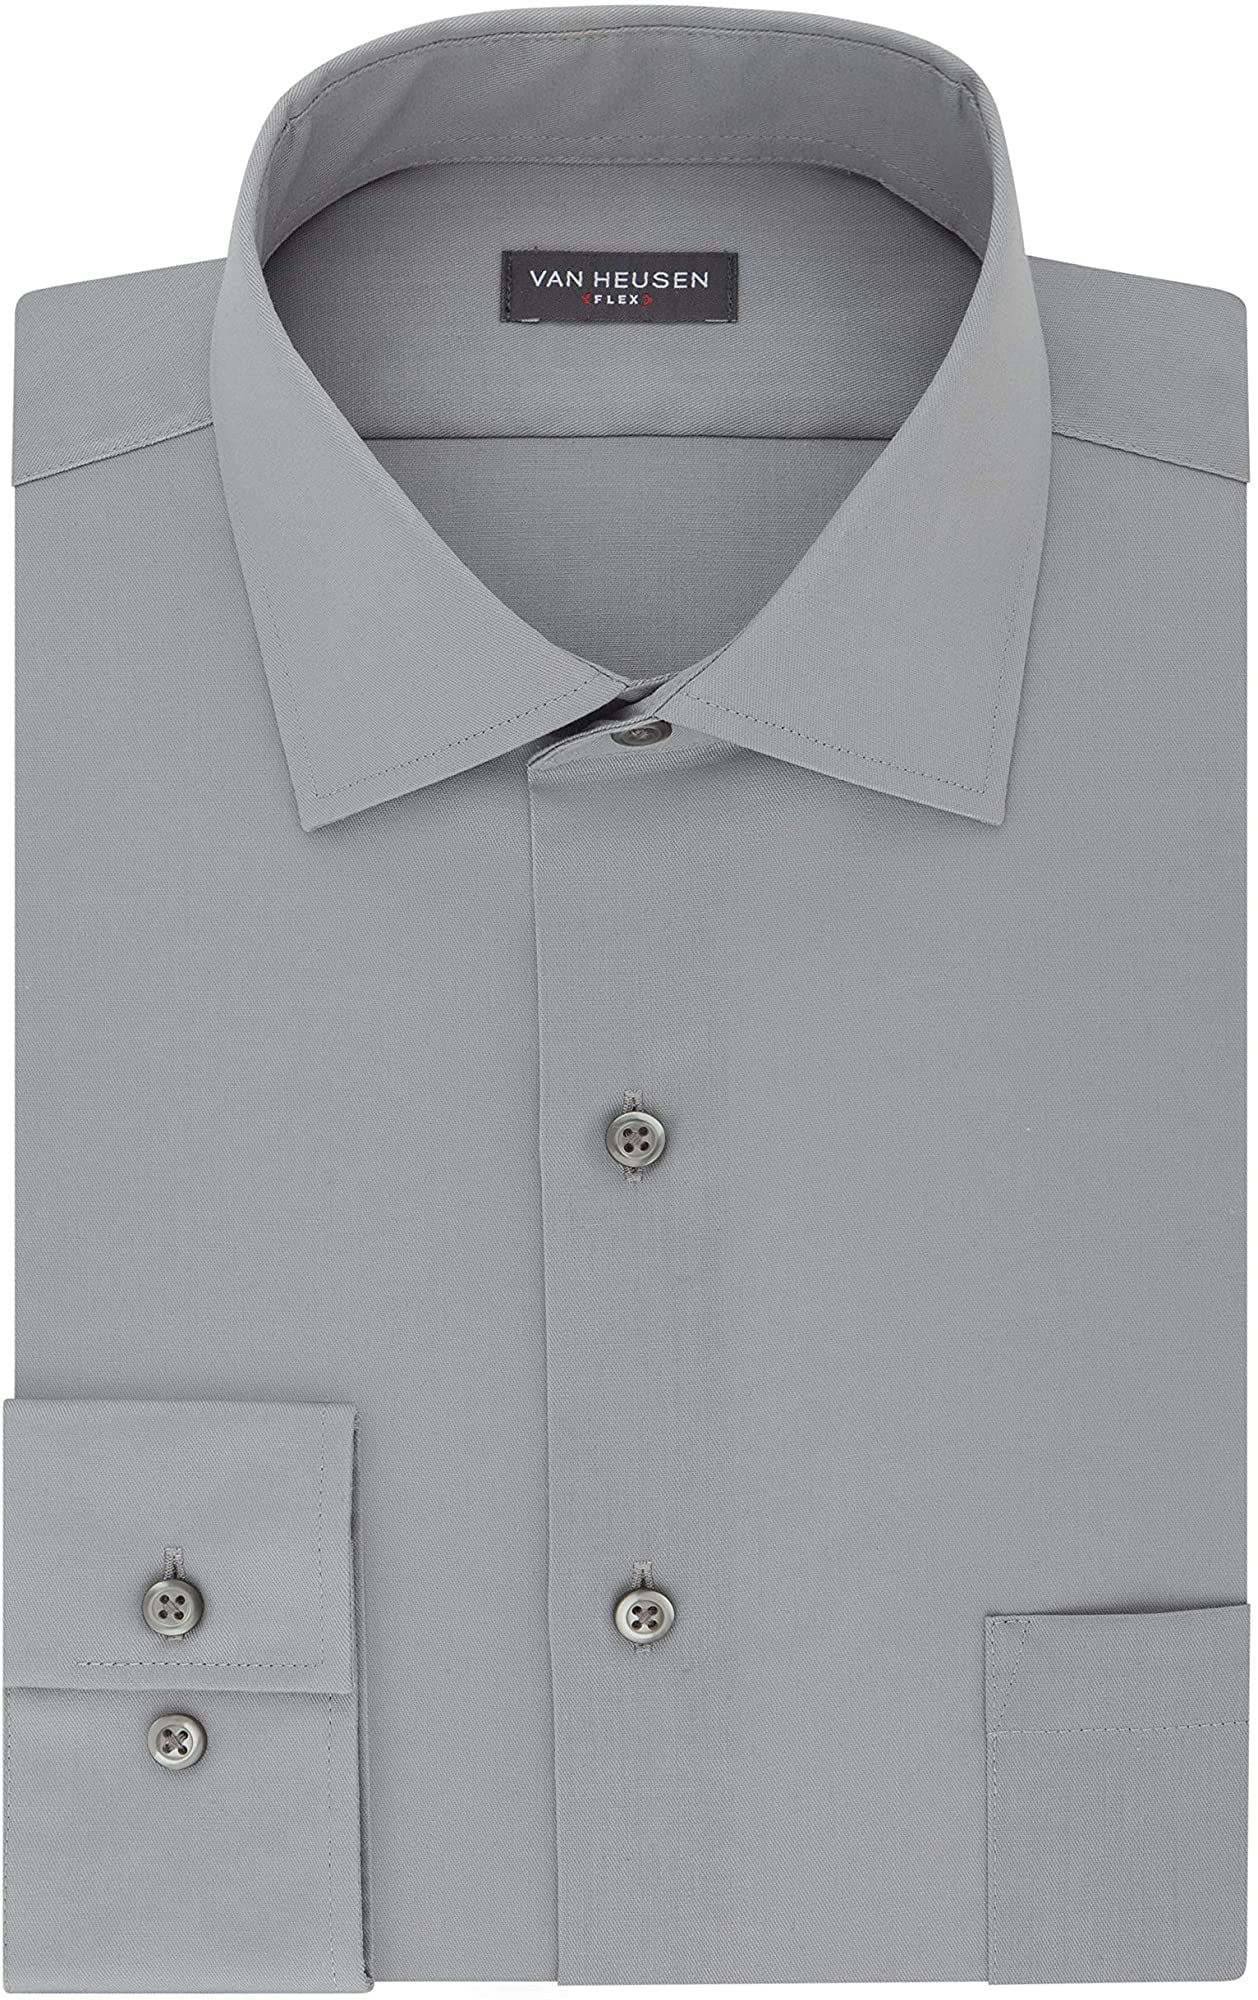 Van Heusen Mens Dress Shirt Flex Regular Fit Solid 